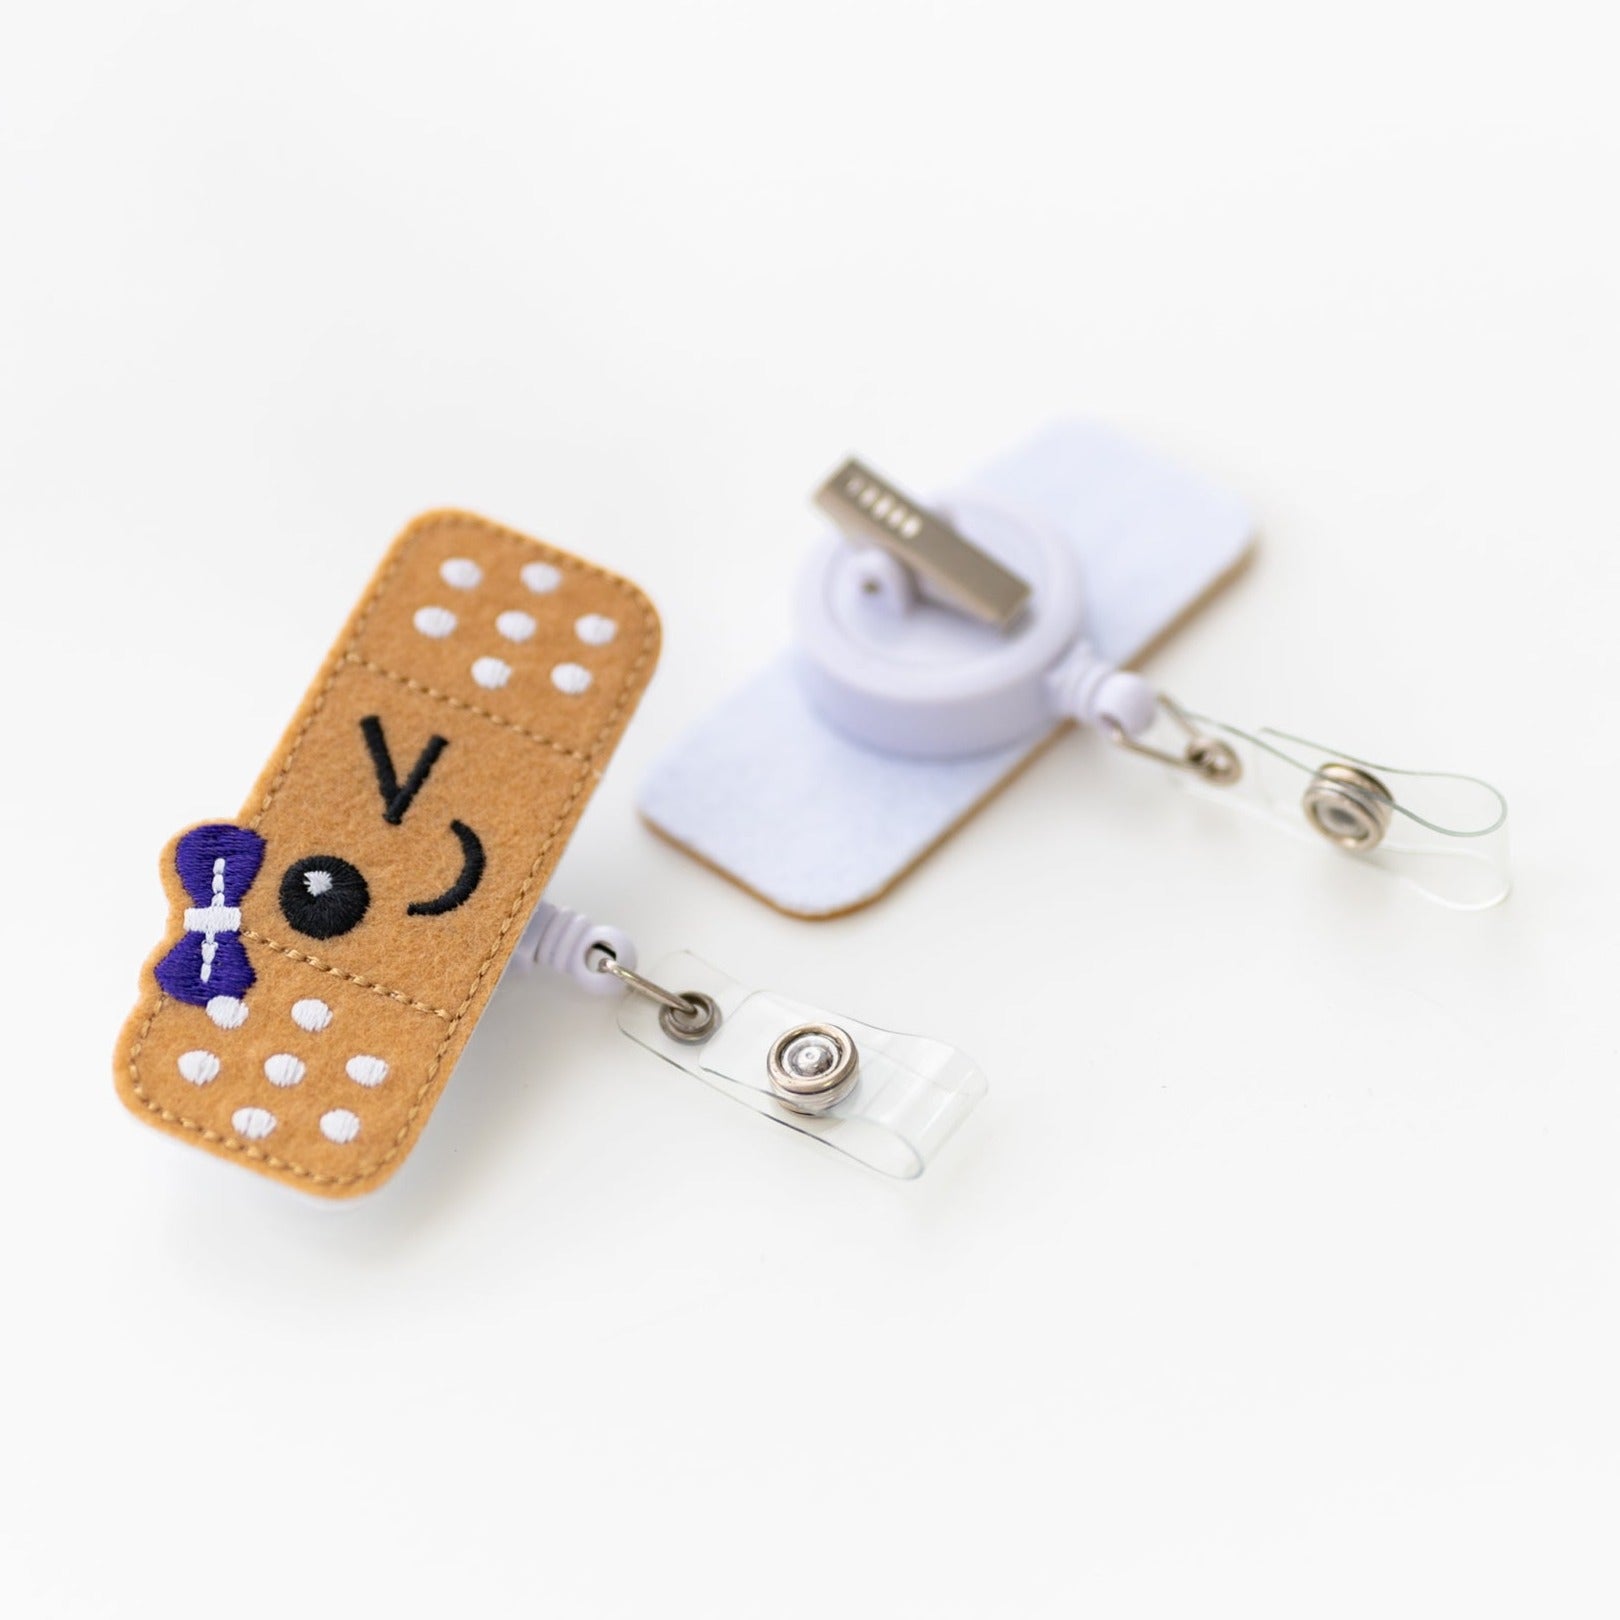 Band-Aid [Curita] - Badge Holder